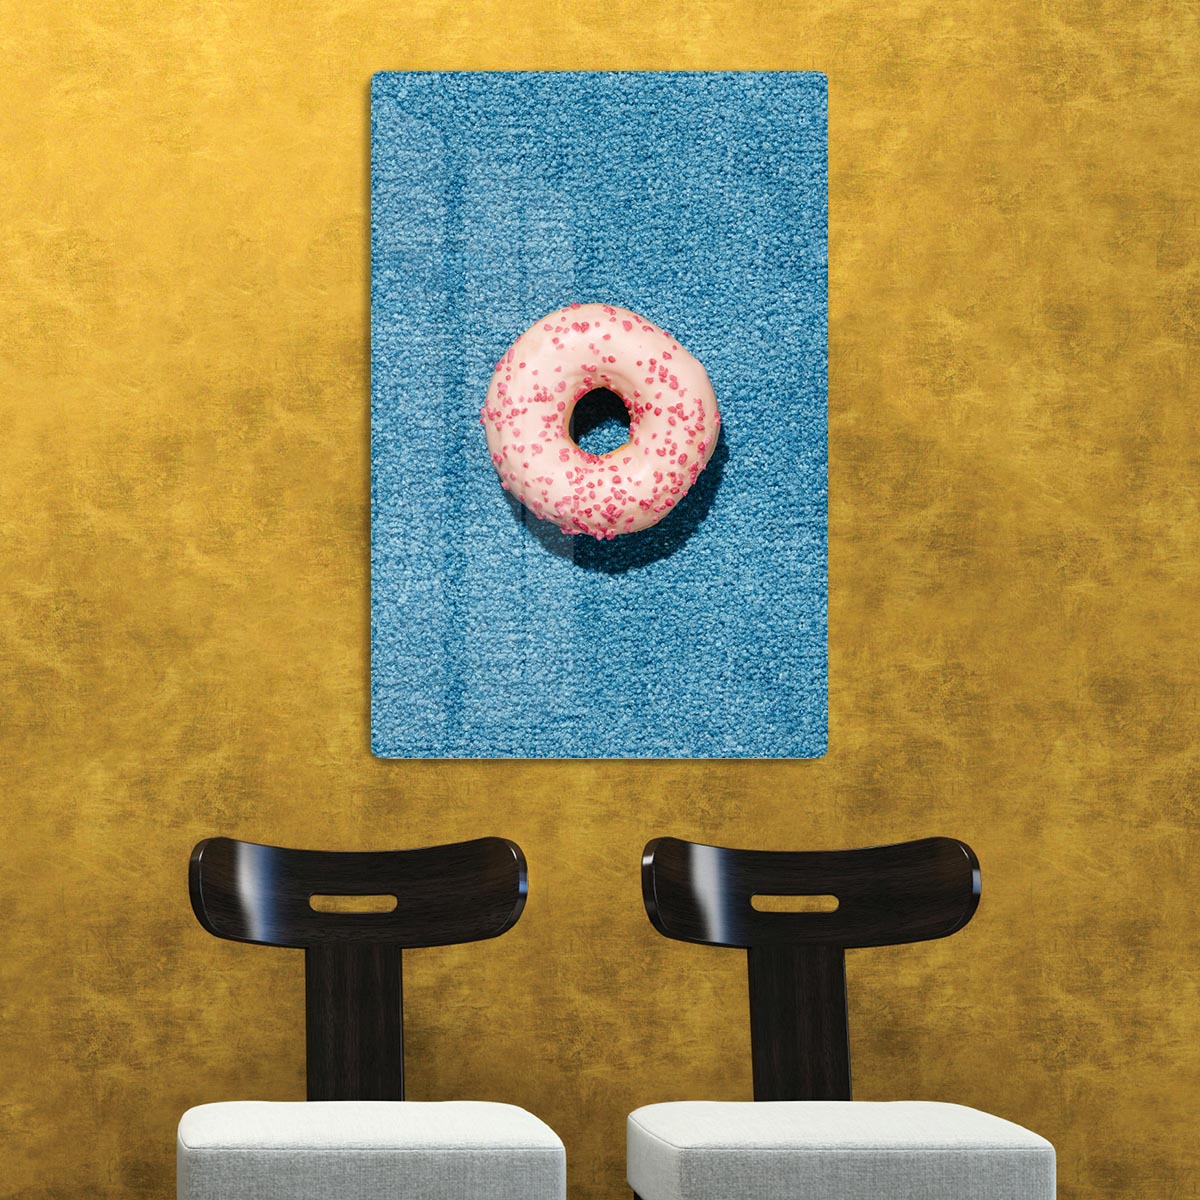 Blue Doughnut HD Metal Print - Canvas Art Rocks - 2